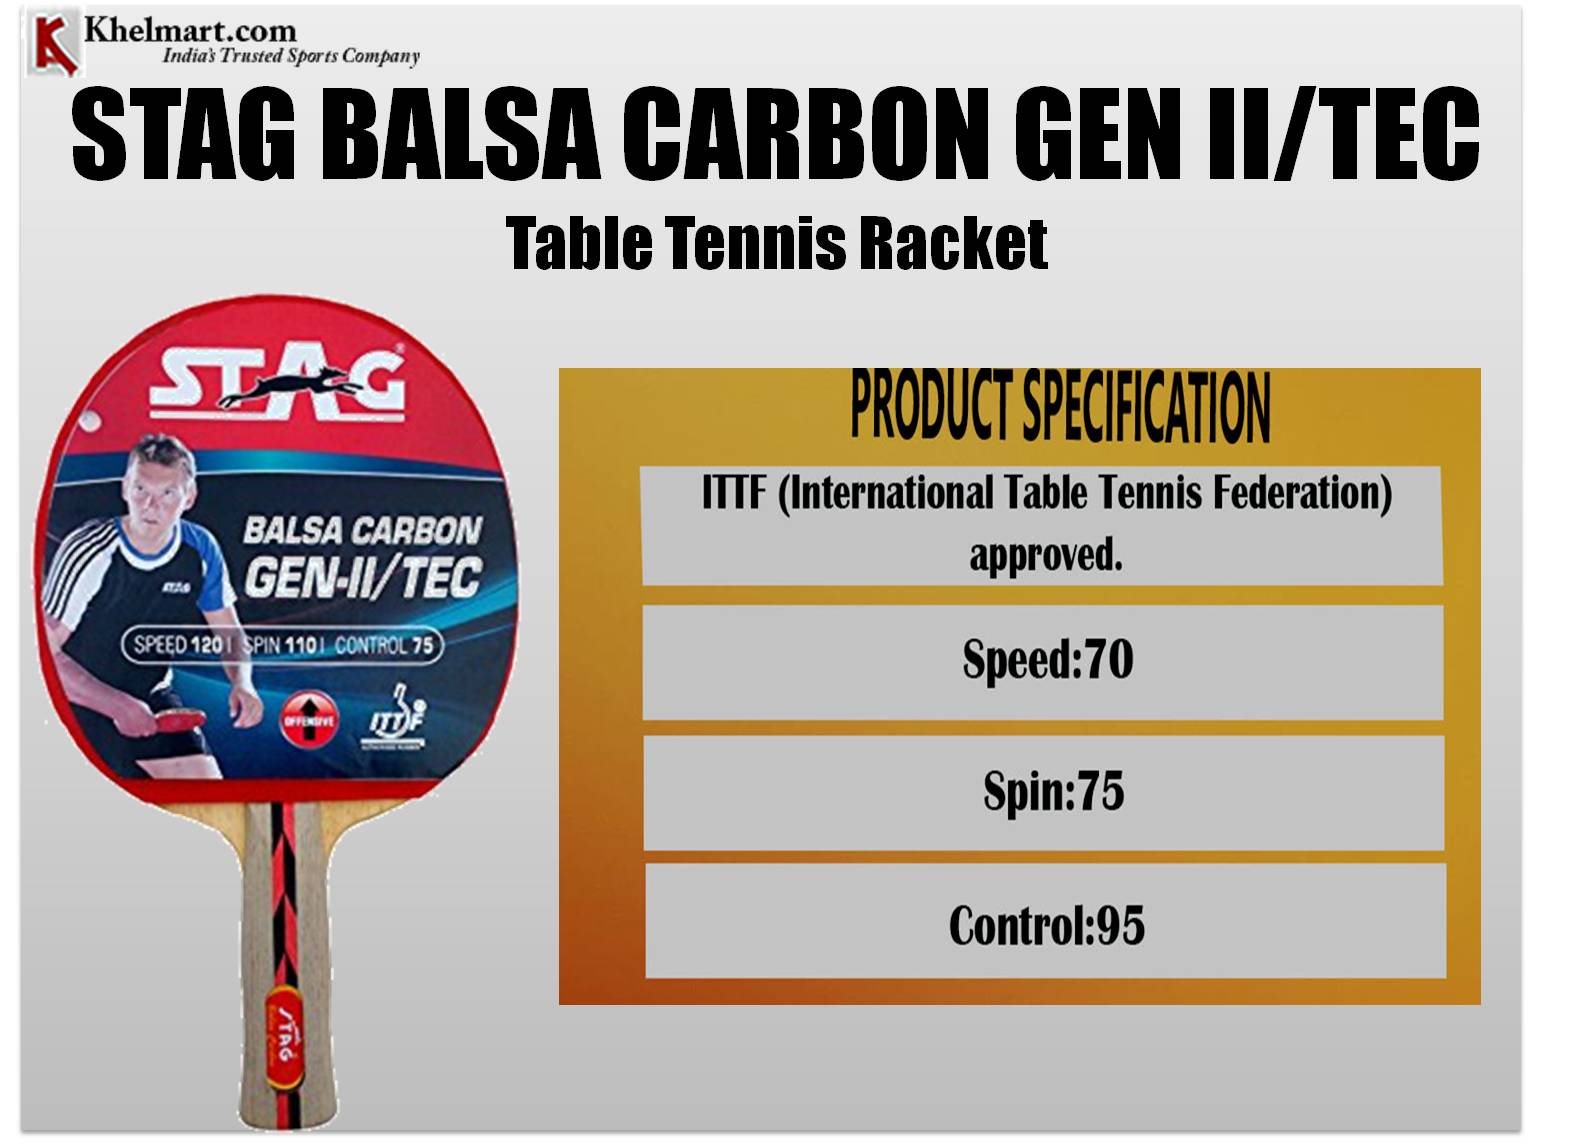 STAG_BALSA_CARBON_GEN_II_TEC_Table_Tennis_Racket.jpg